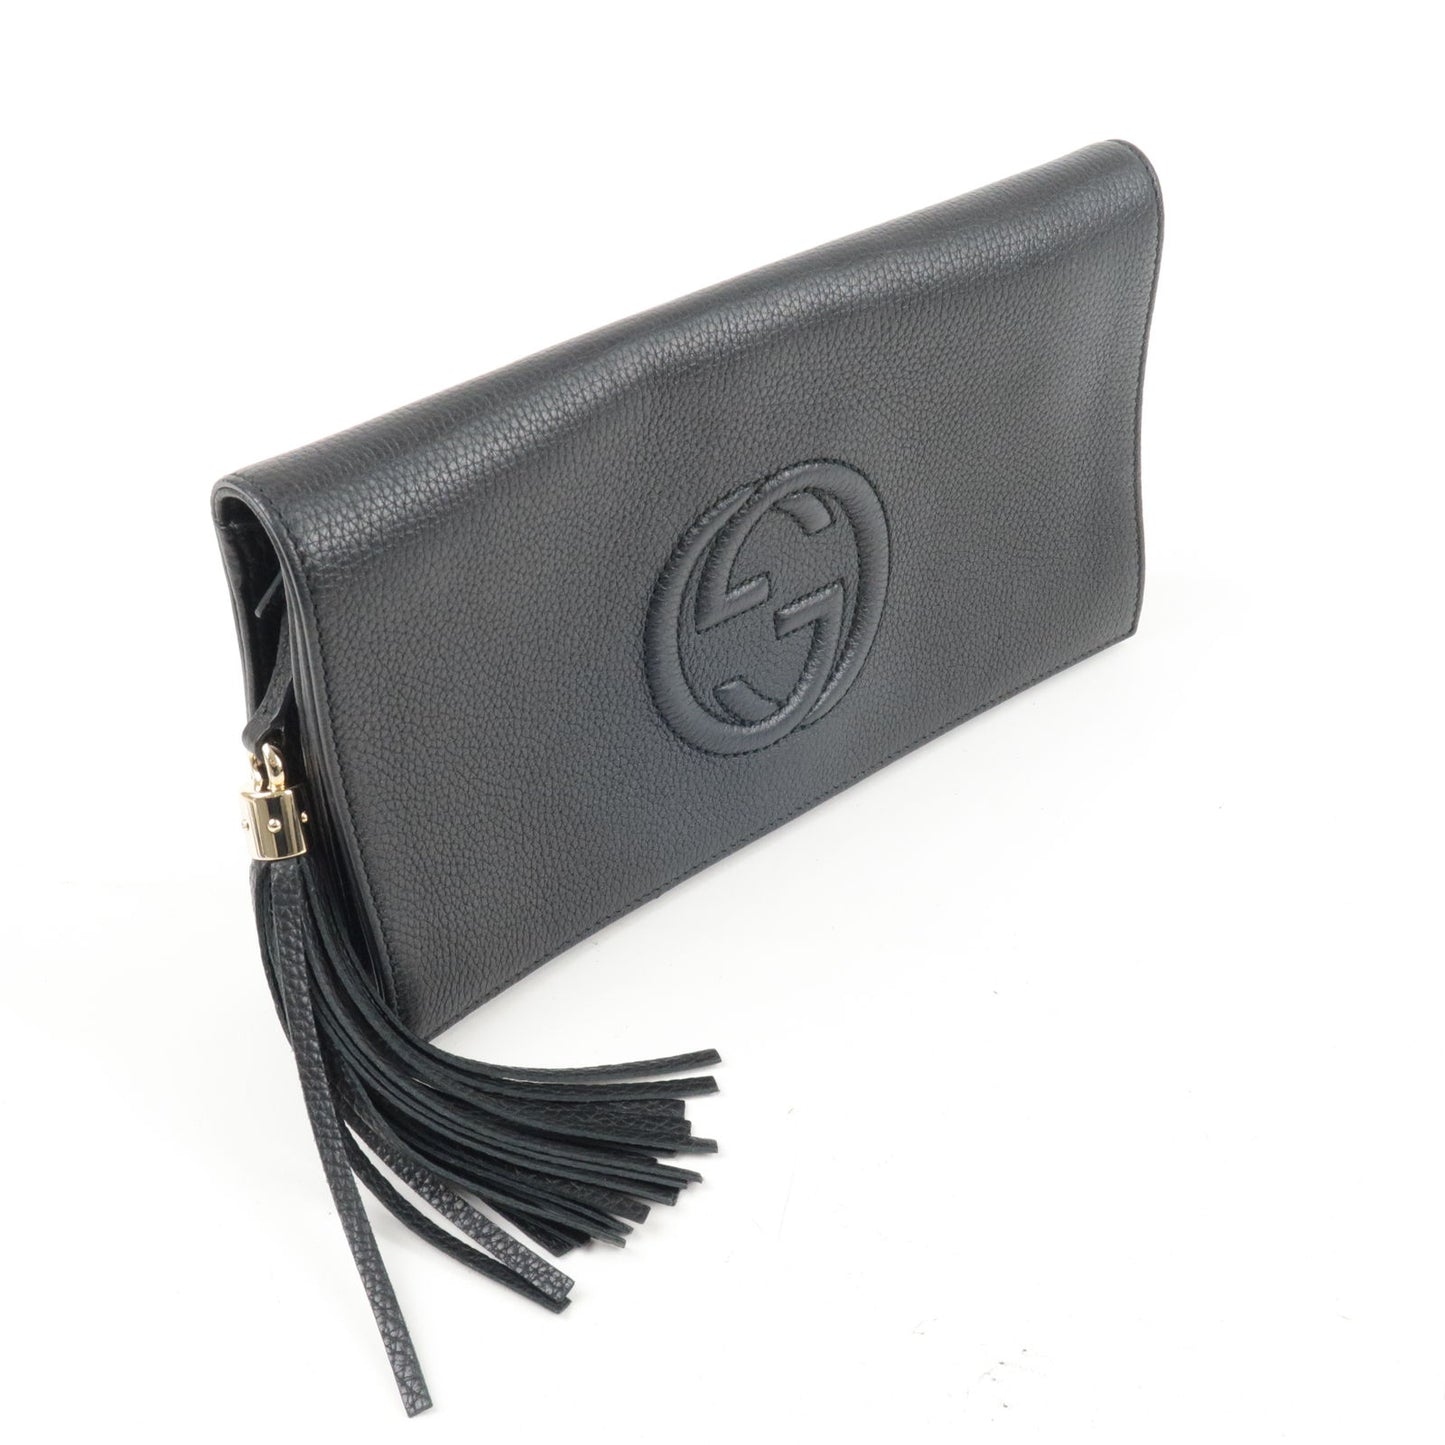 GUCCI SOHO Leather Clutch Bag Black 336753